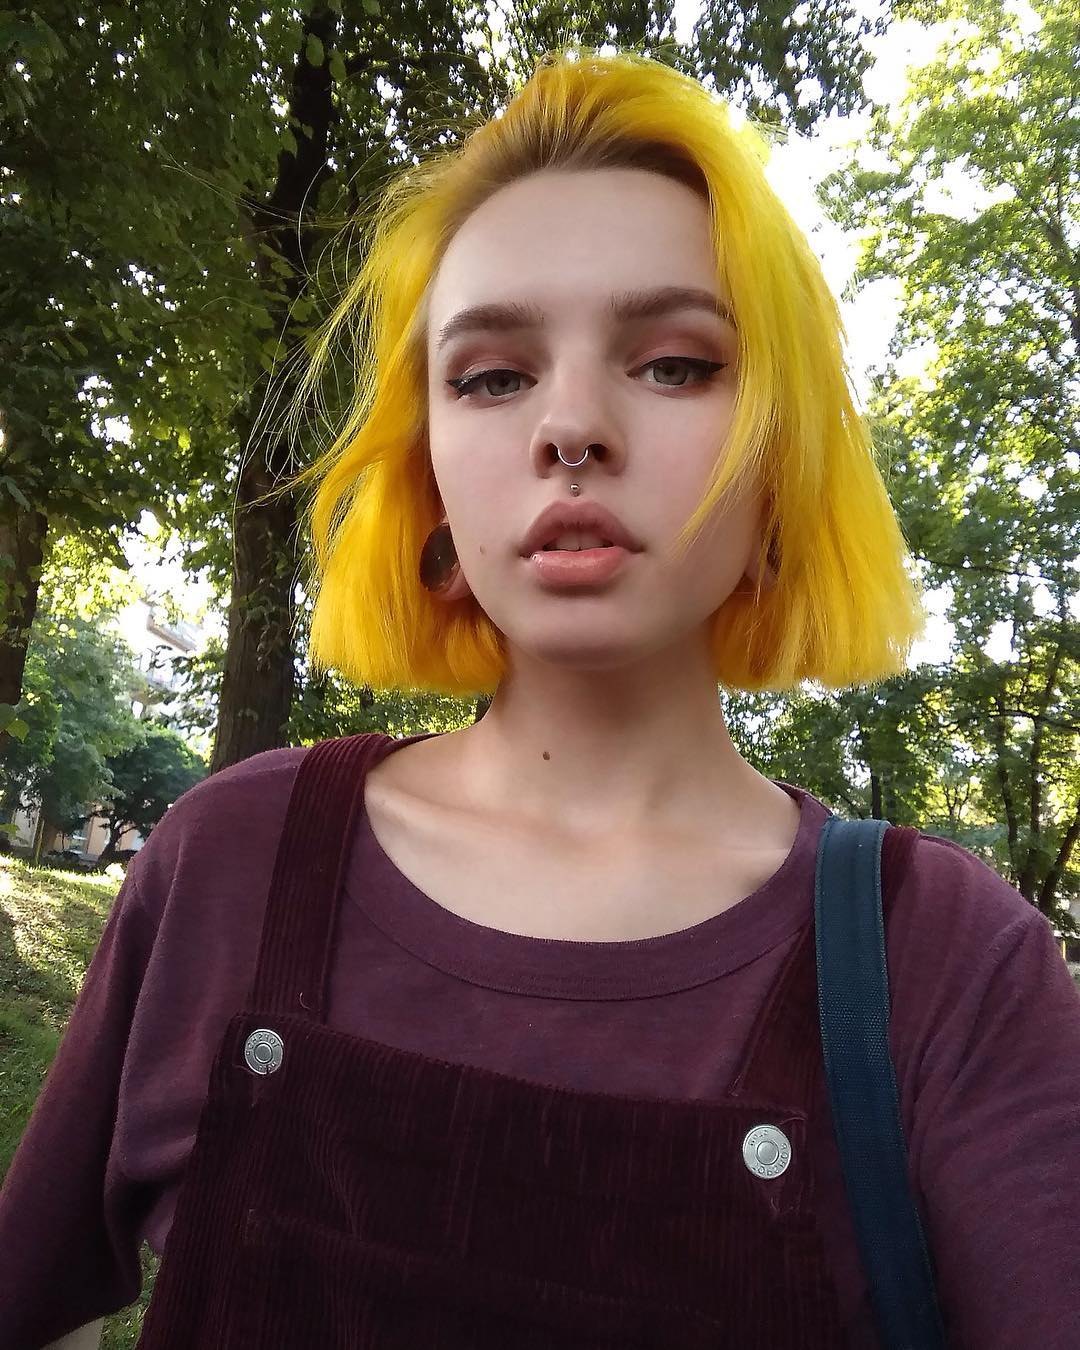 Yellow hair girl